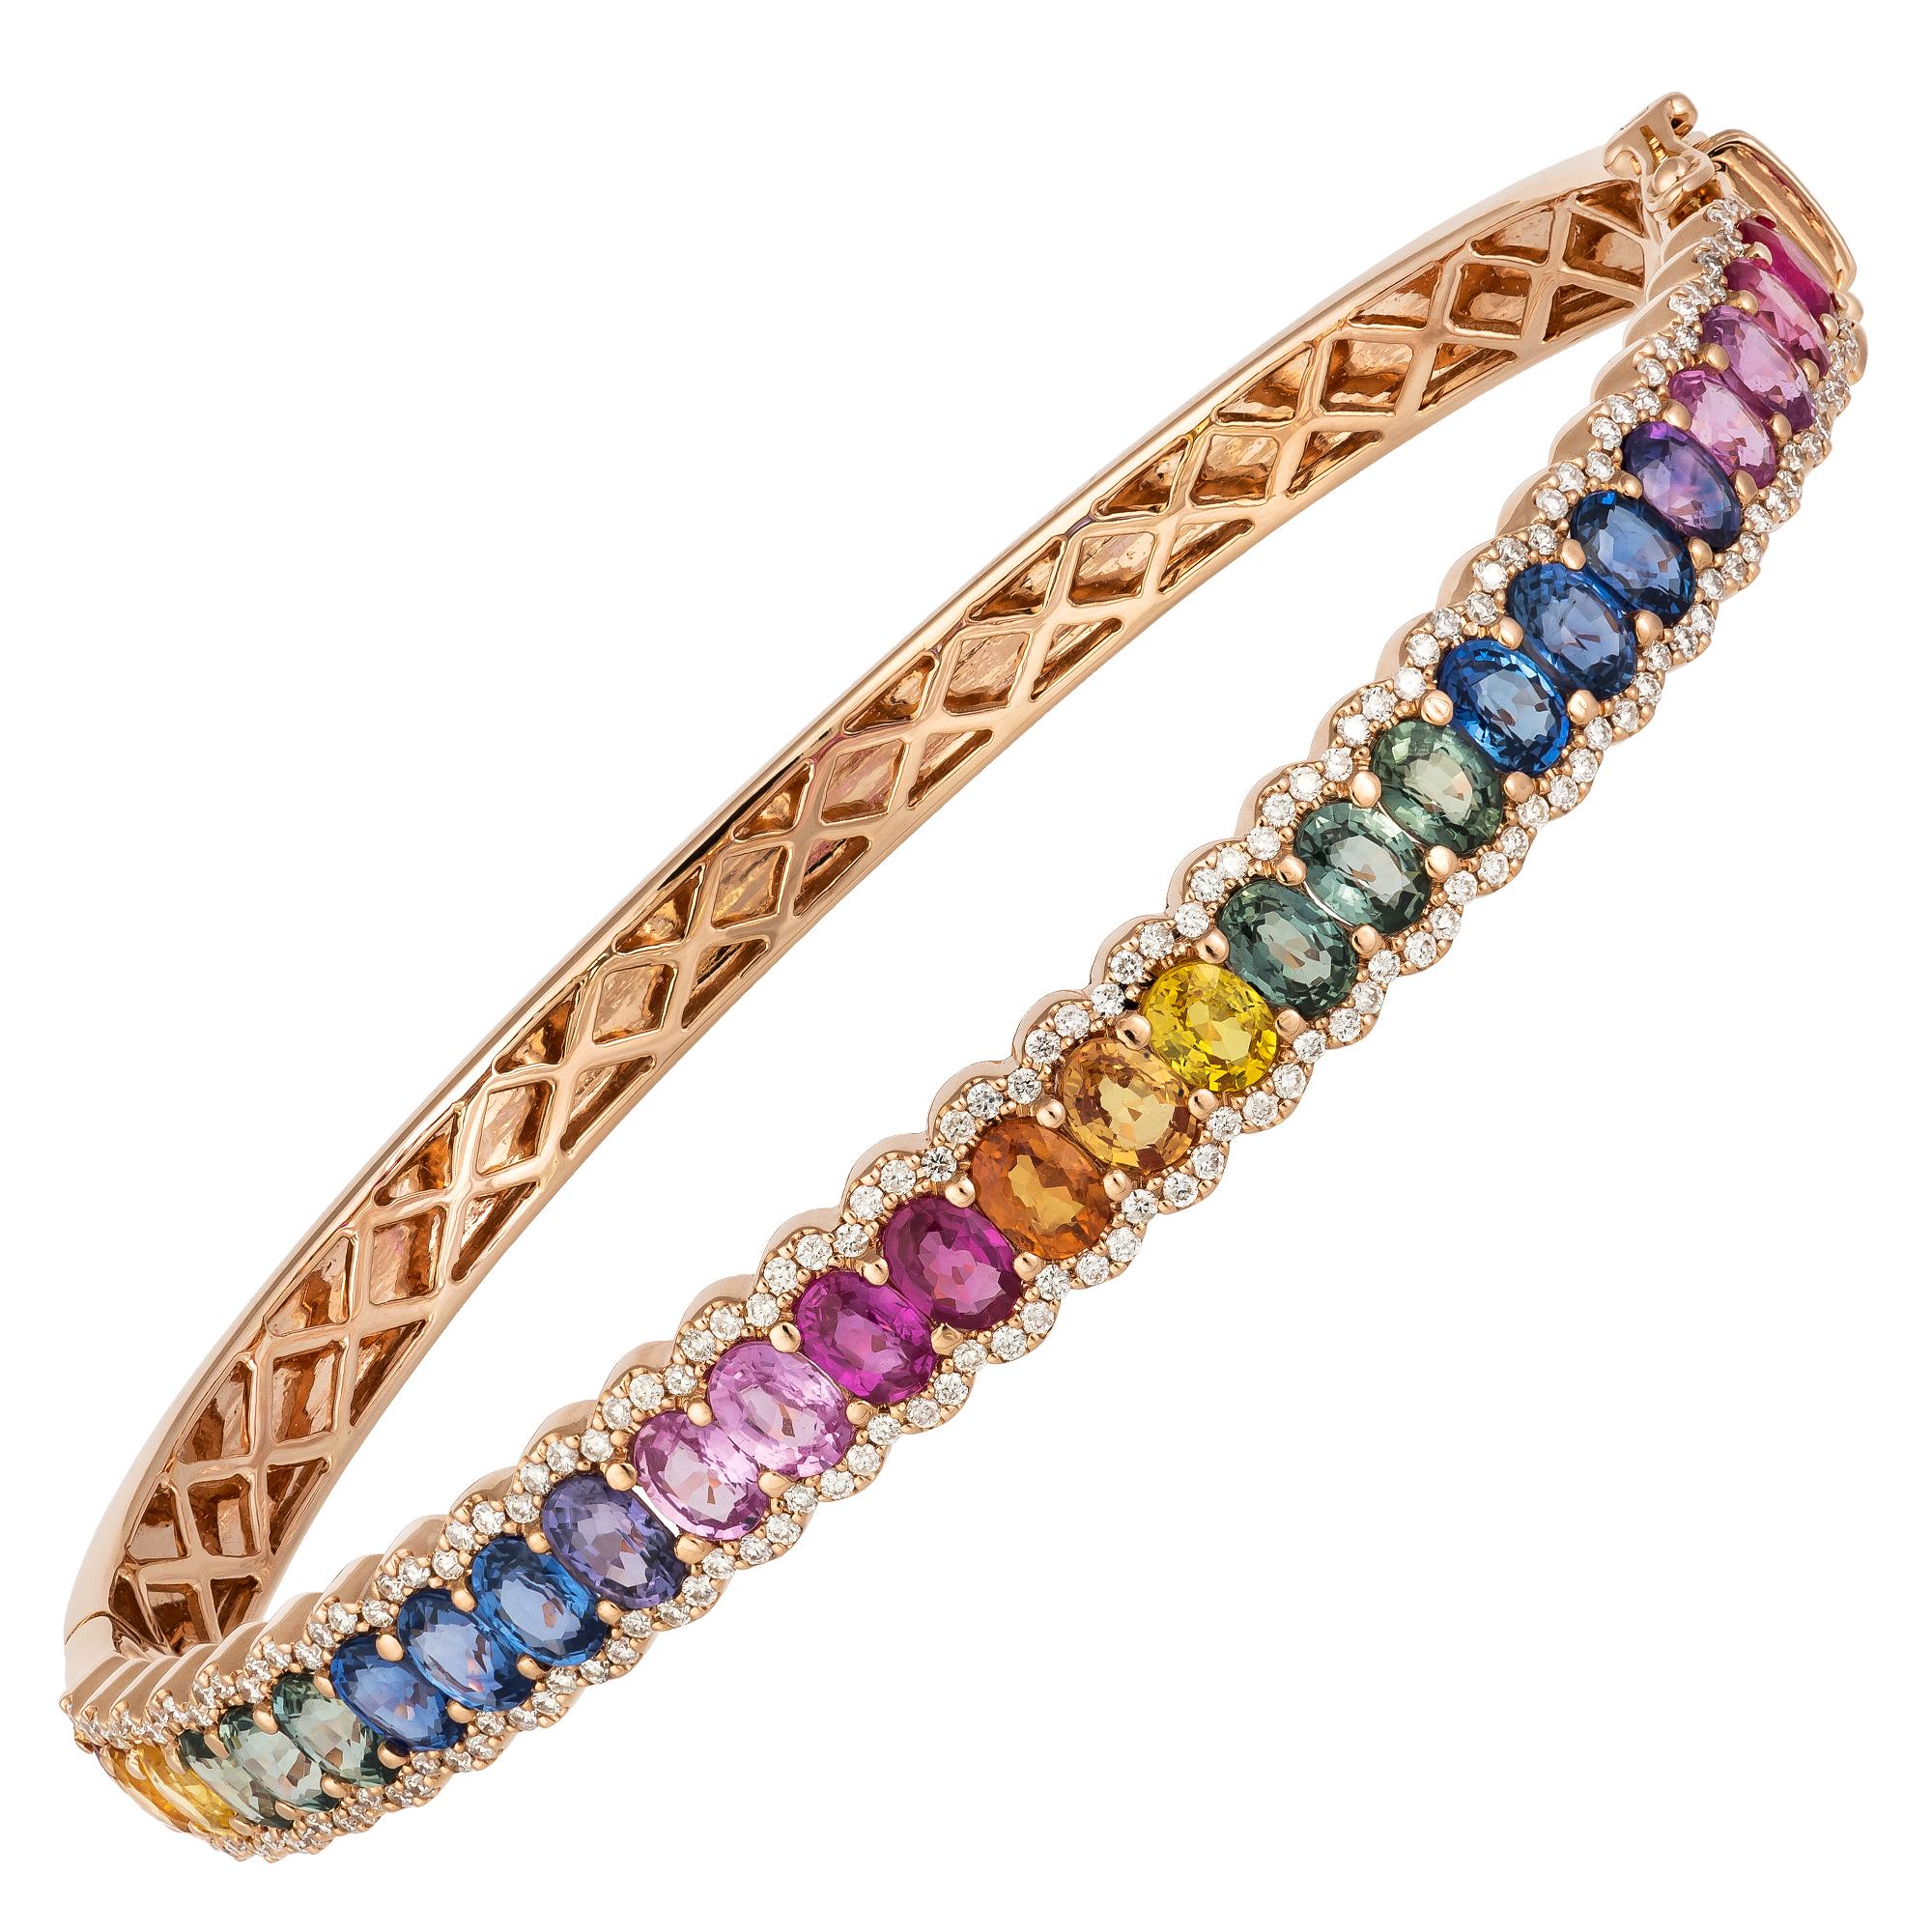 Oval Cut Colourful Sapphire Diamond Modern Bangle Bracelet for Her 18K Rose Gold